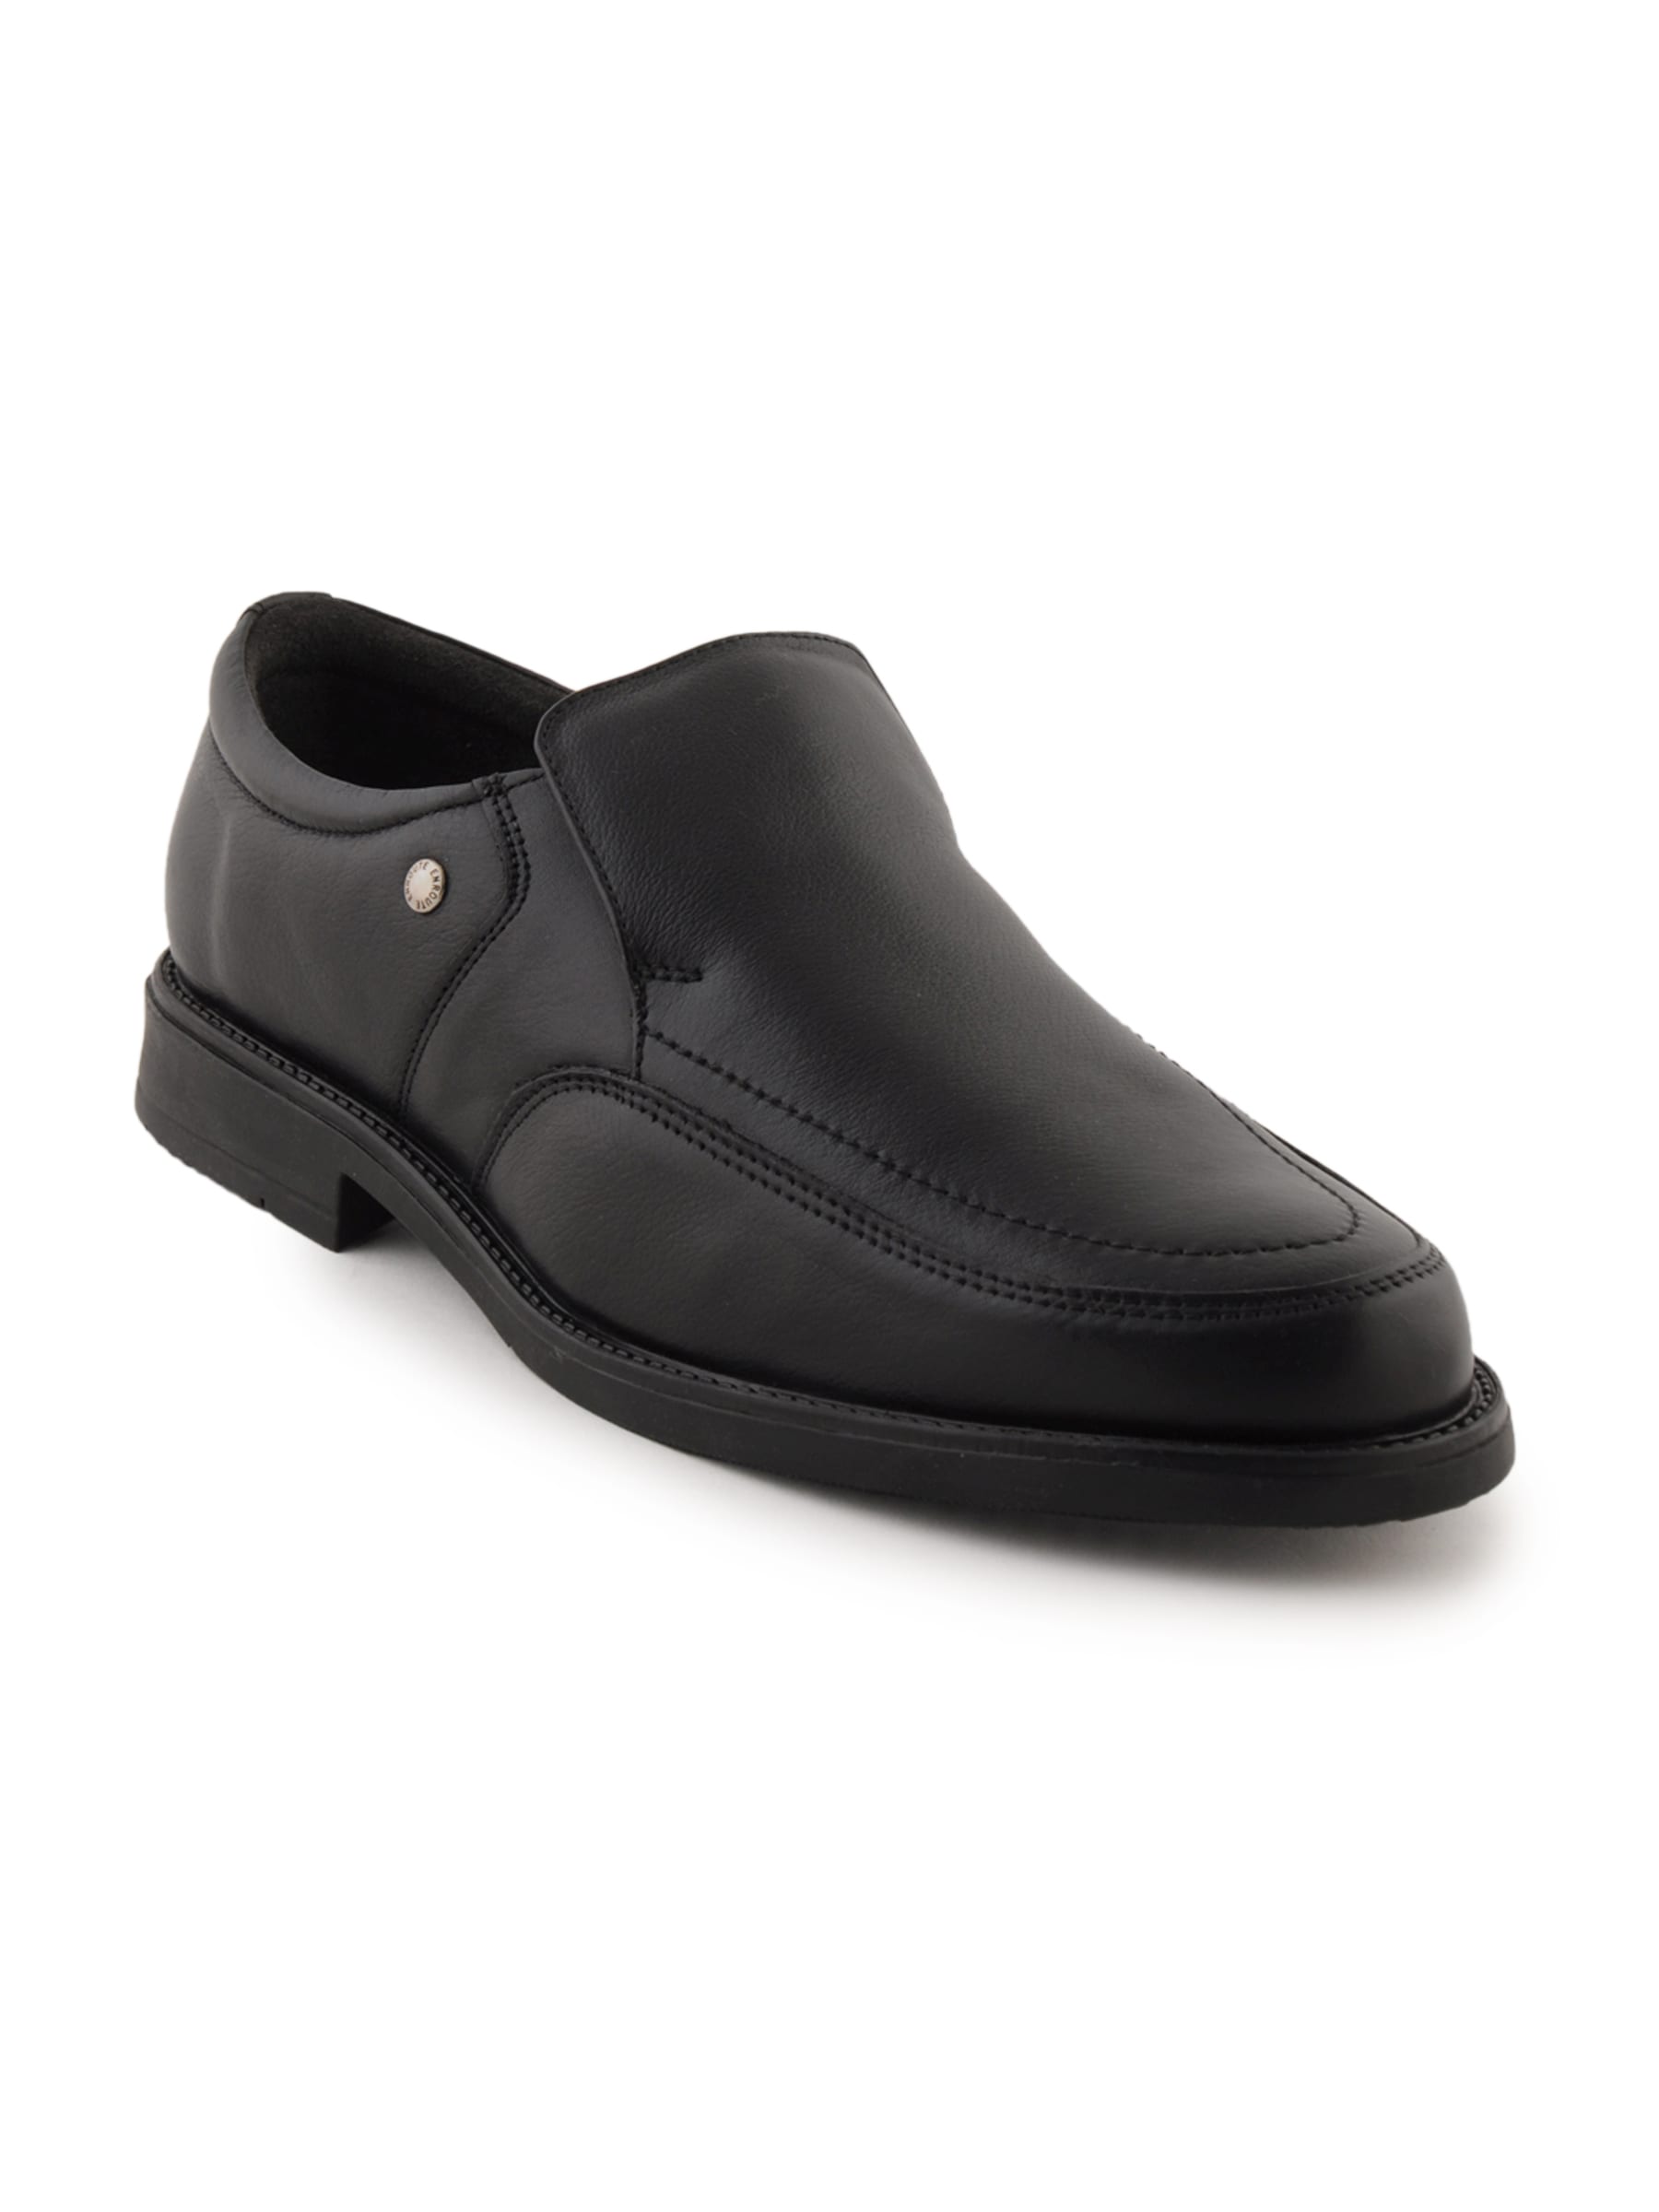 Enroute Men Leather Black Formal Shoes